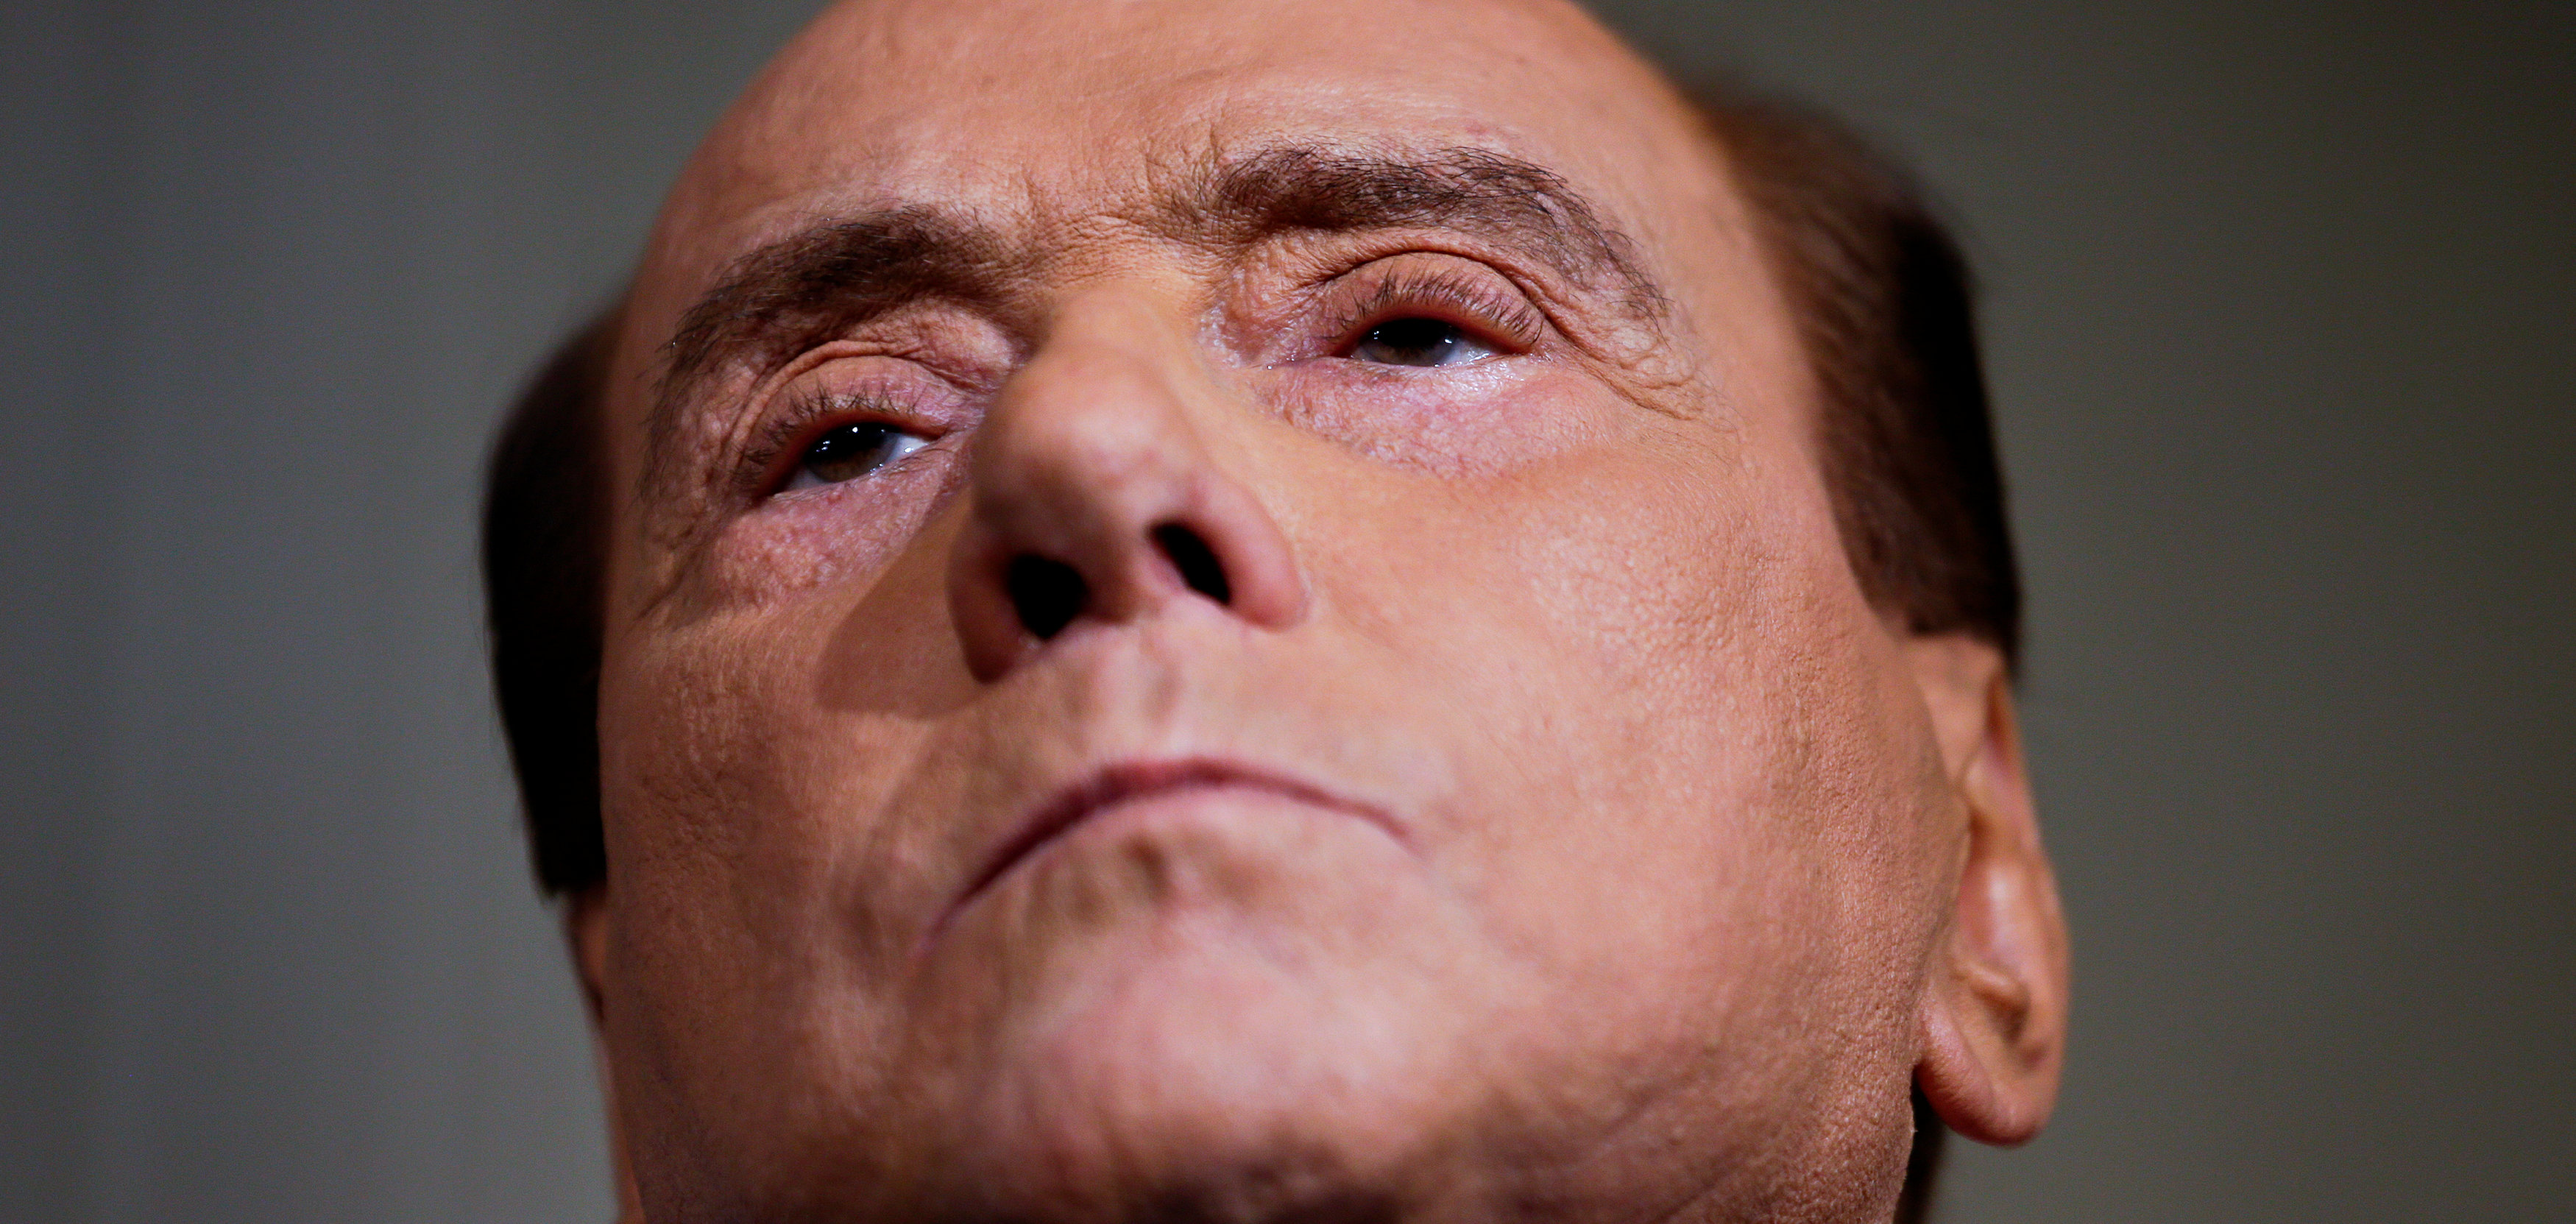 Silvio Berlusconi, ingresado con coronavirus, se encuentran en “fase delicada”